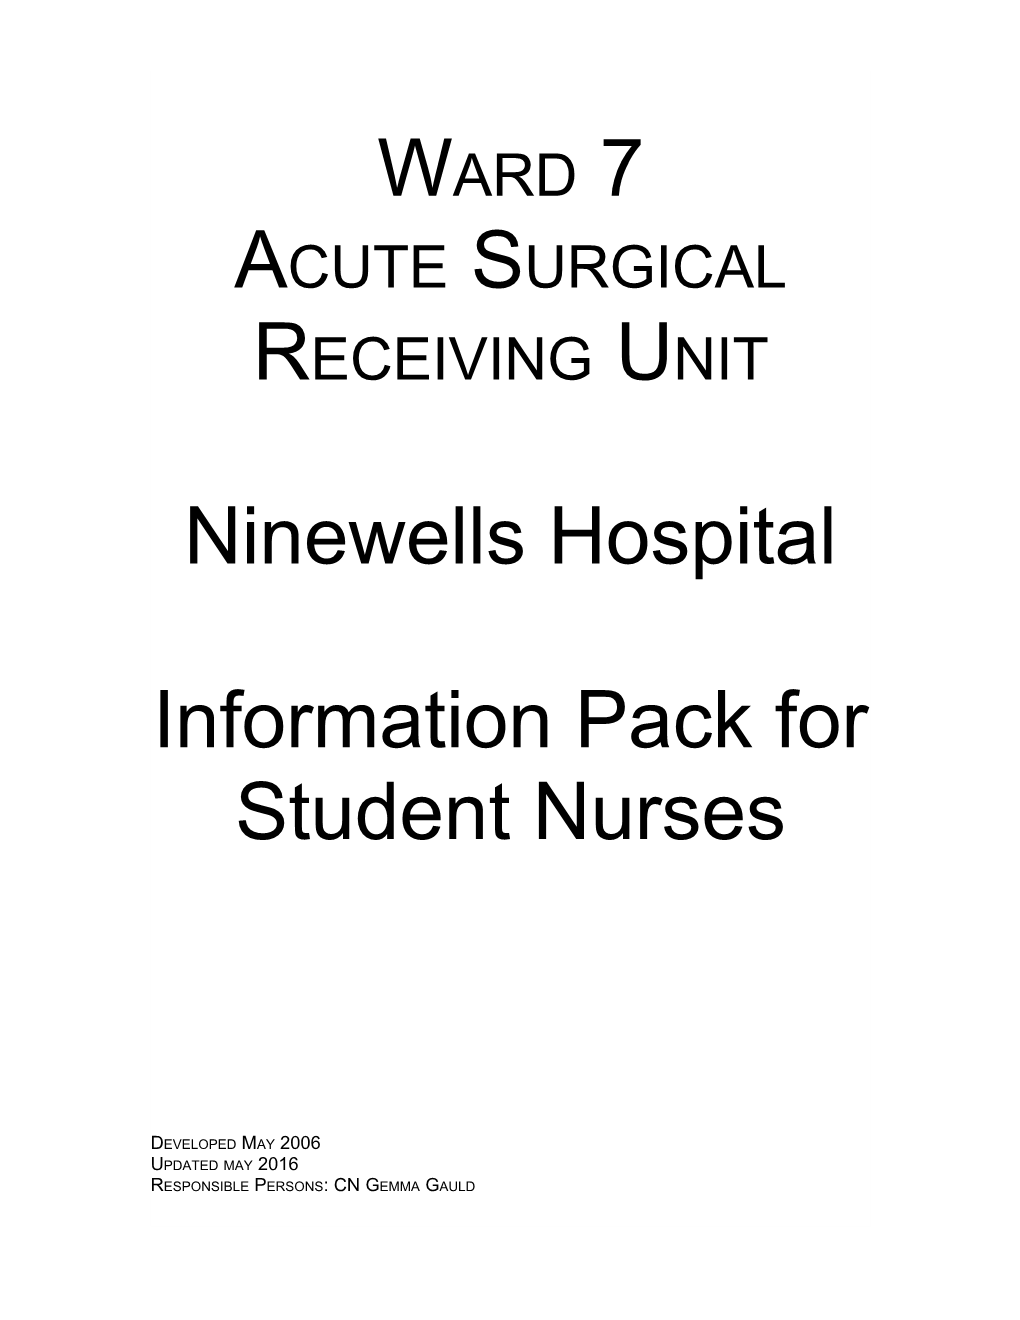 Student Nurse Information Pack